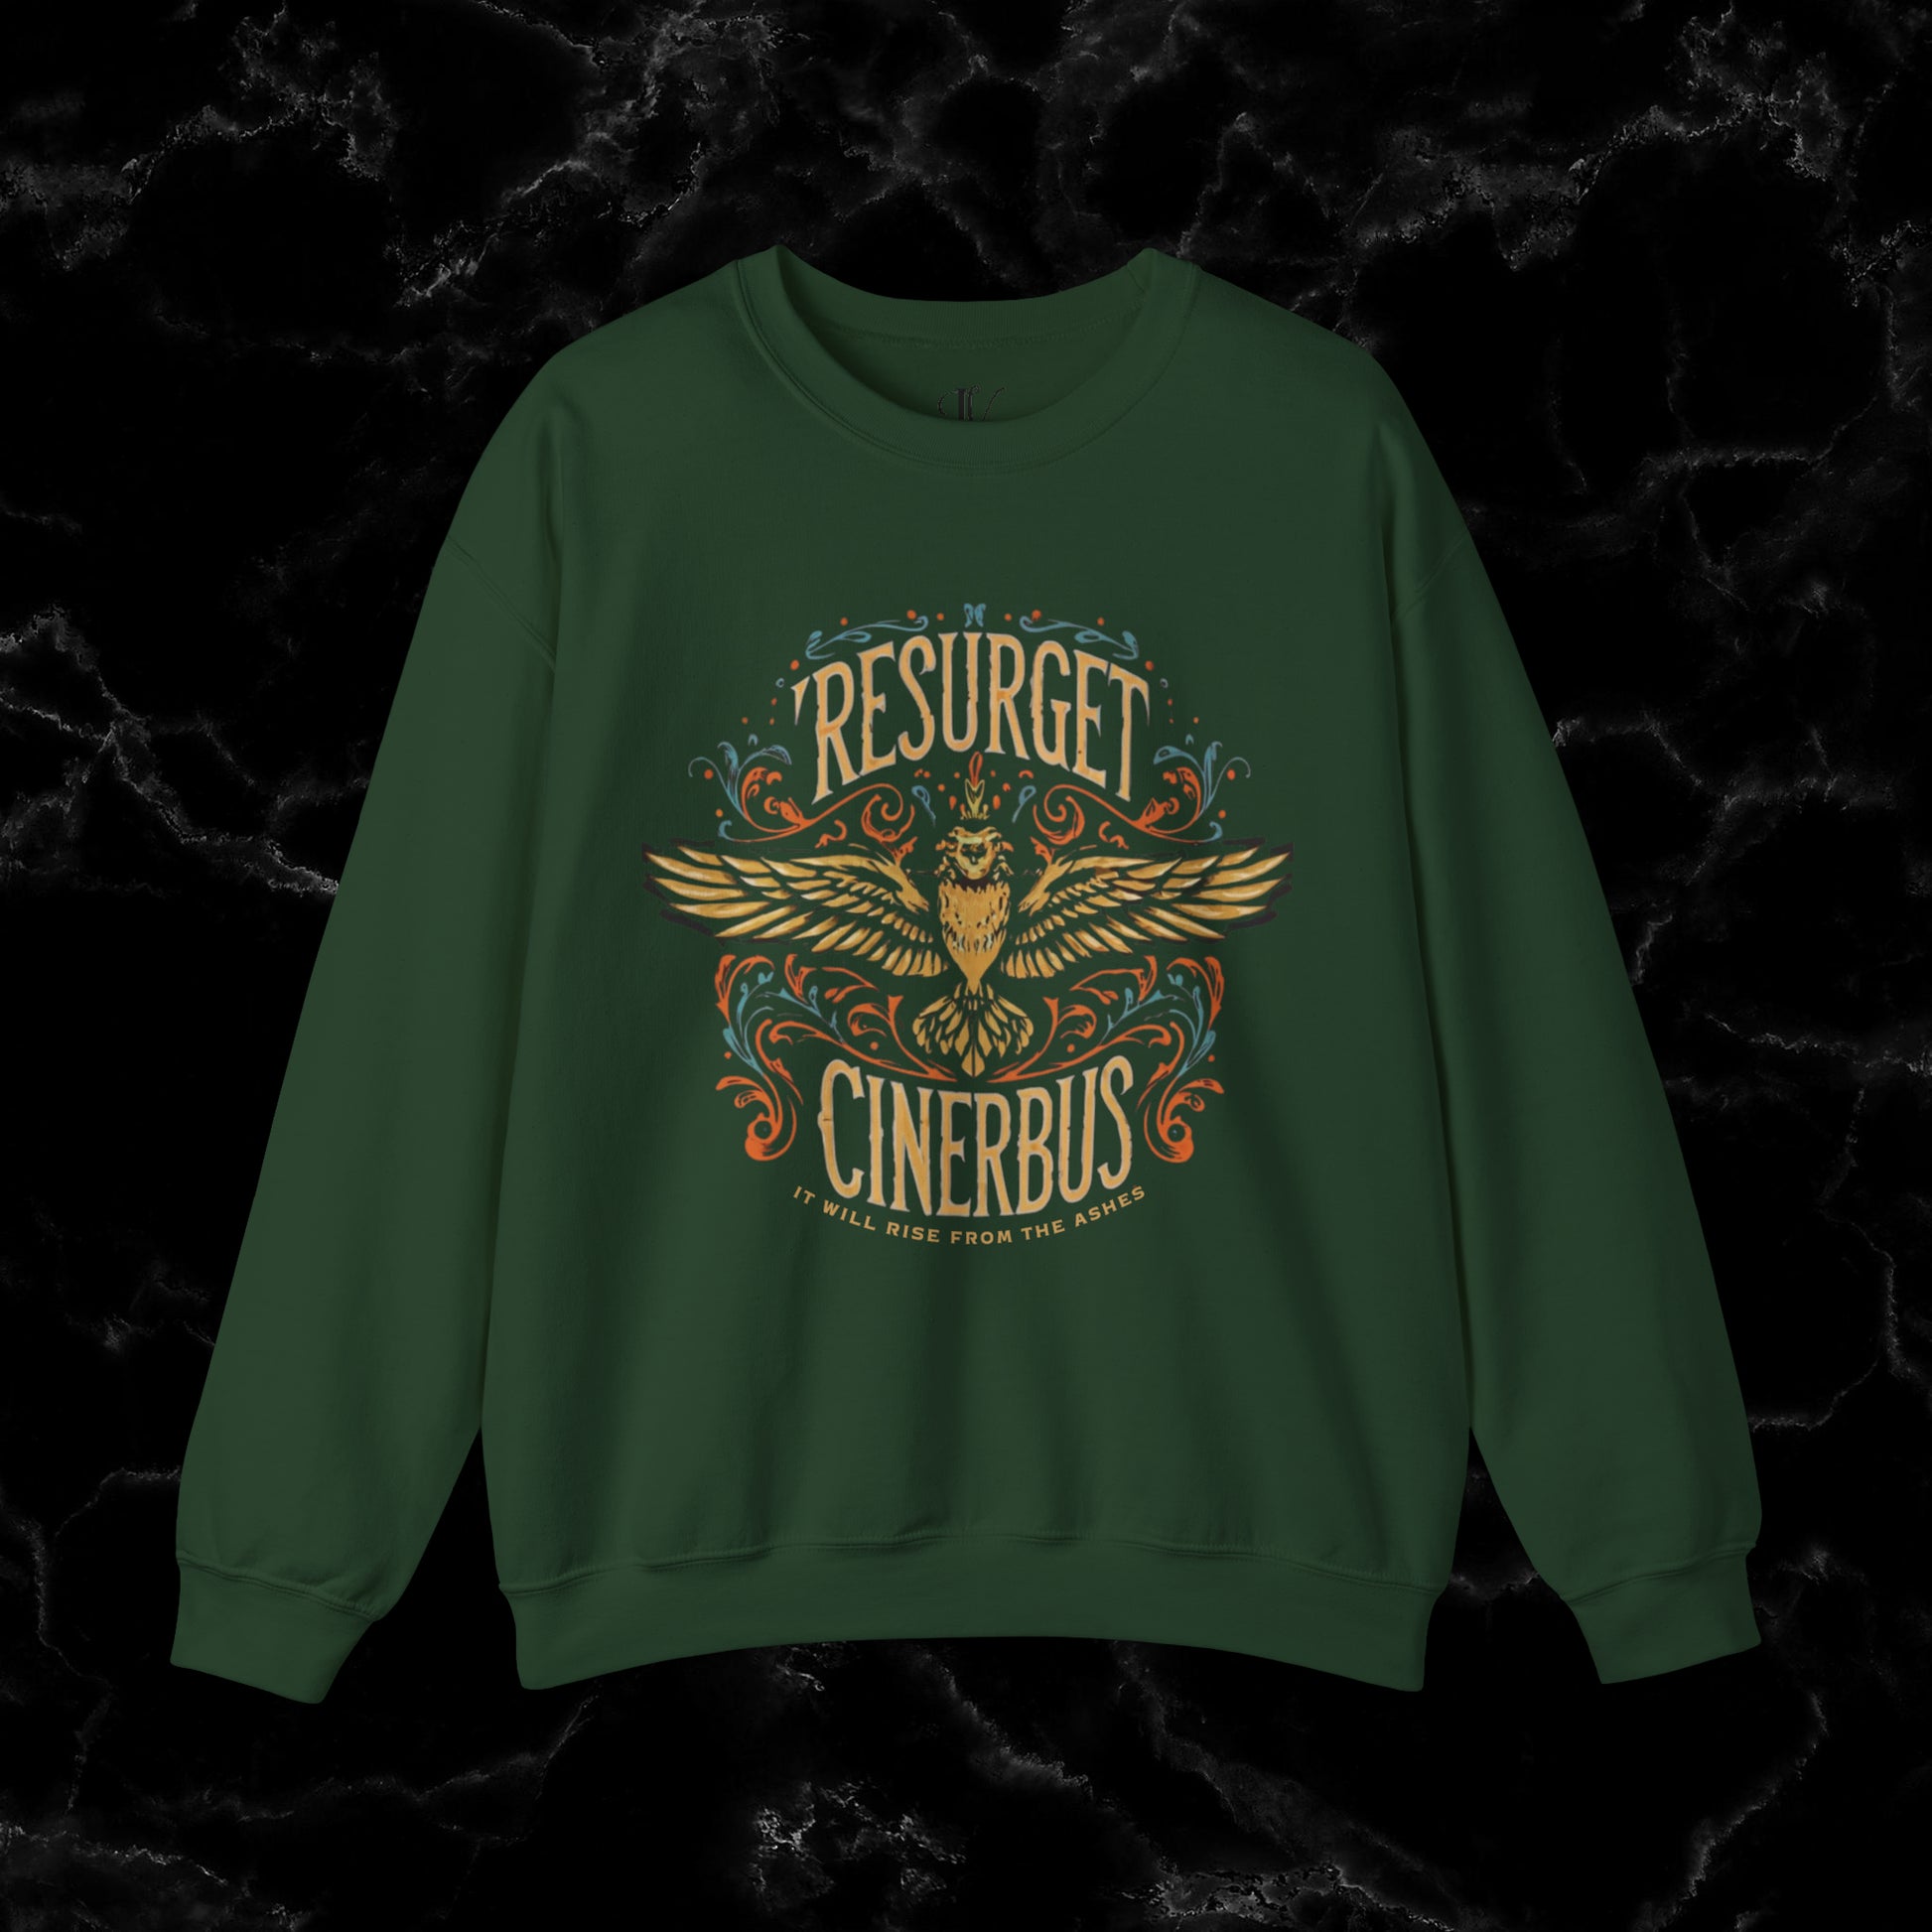 Resurget Cineribus Unisex Crewneck Sweatshirt - Latin Inspirational Gifts for Sports Football Fans Sweatshirt S Forest Green 